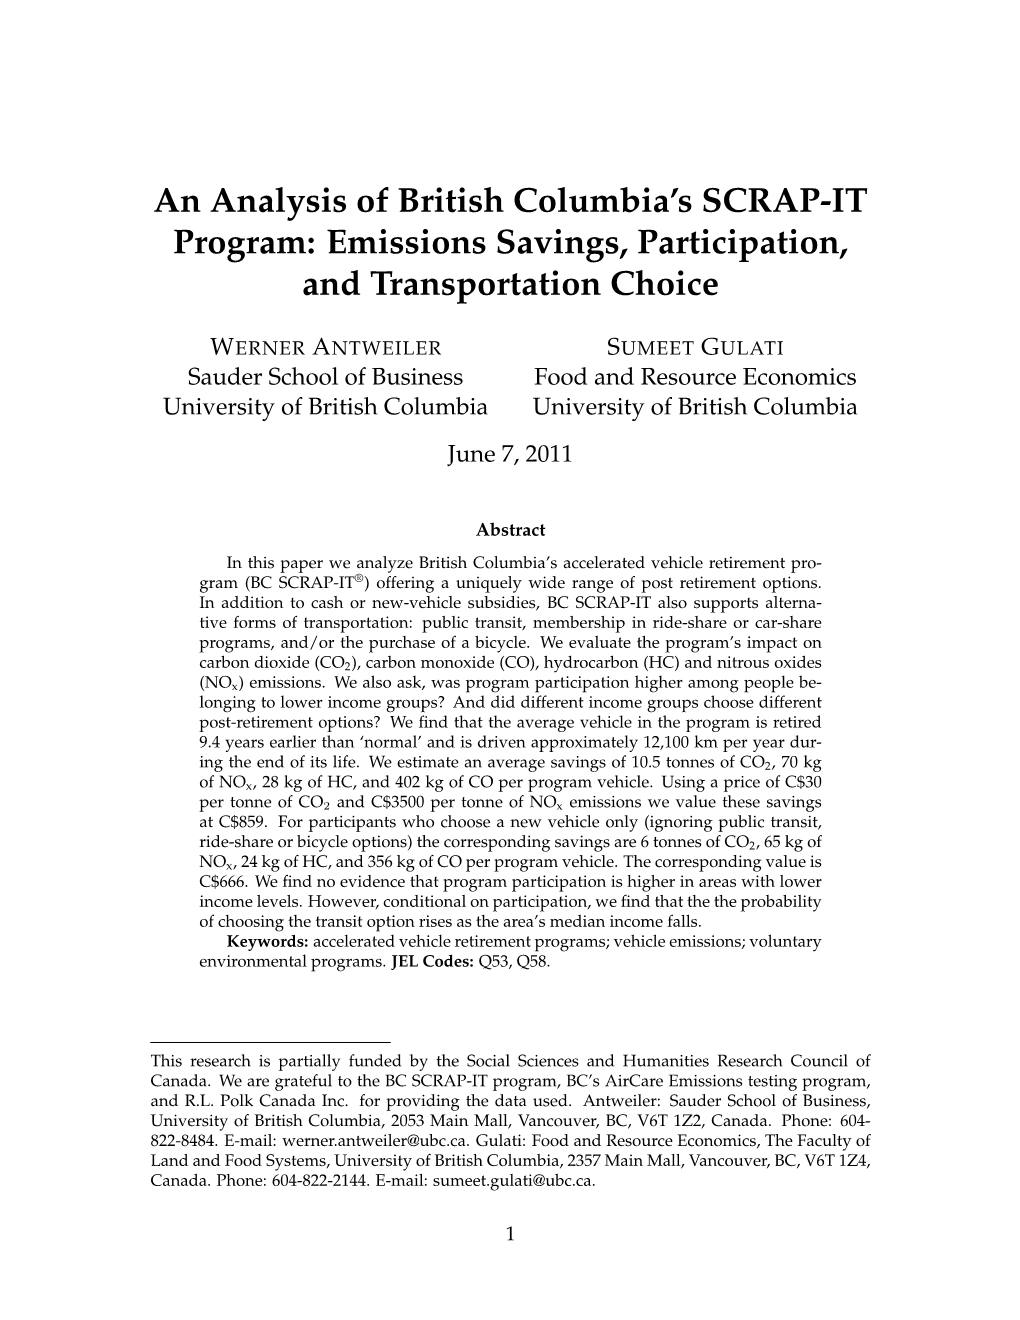 An Analysis of British Columbia's SCRAP-IT Program: Emissions